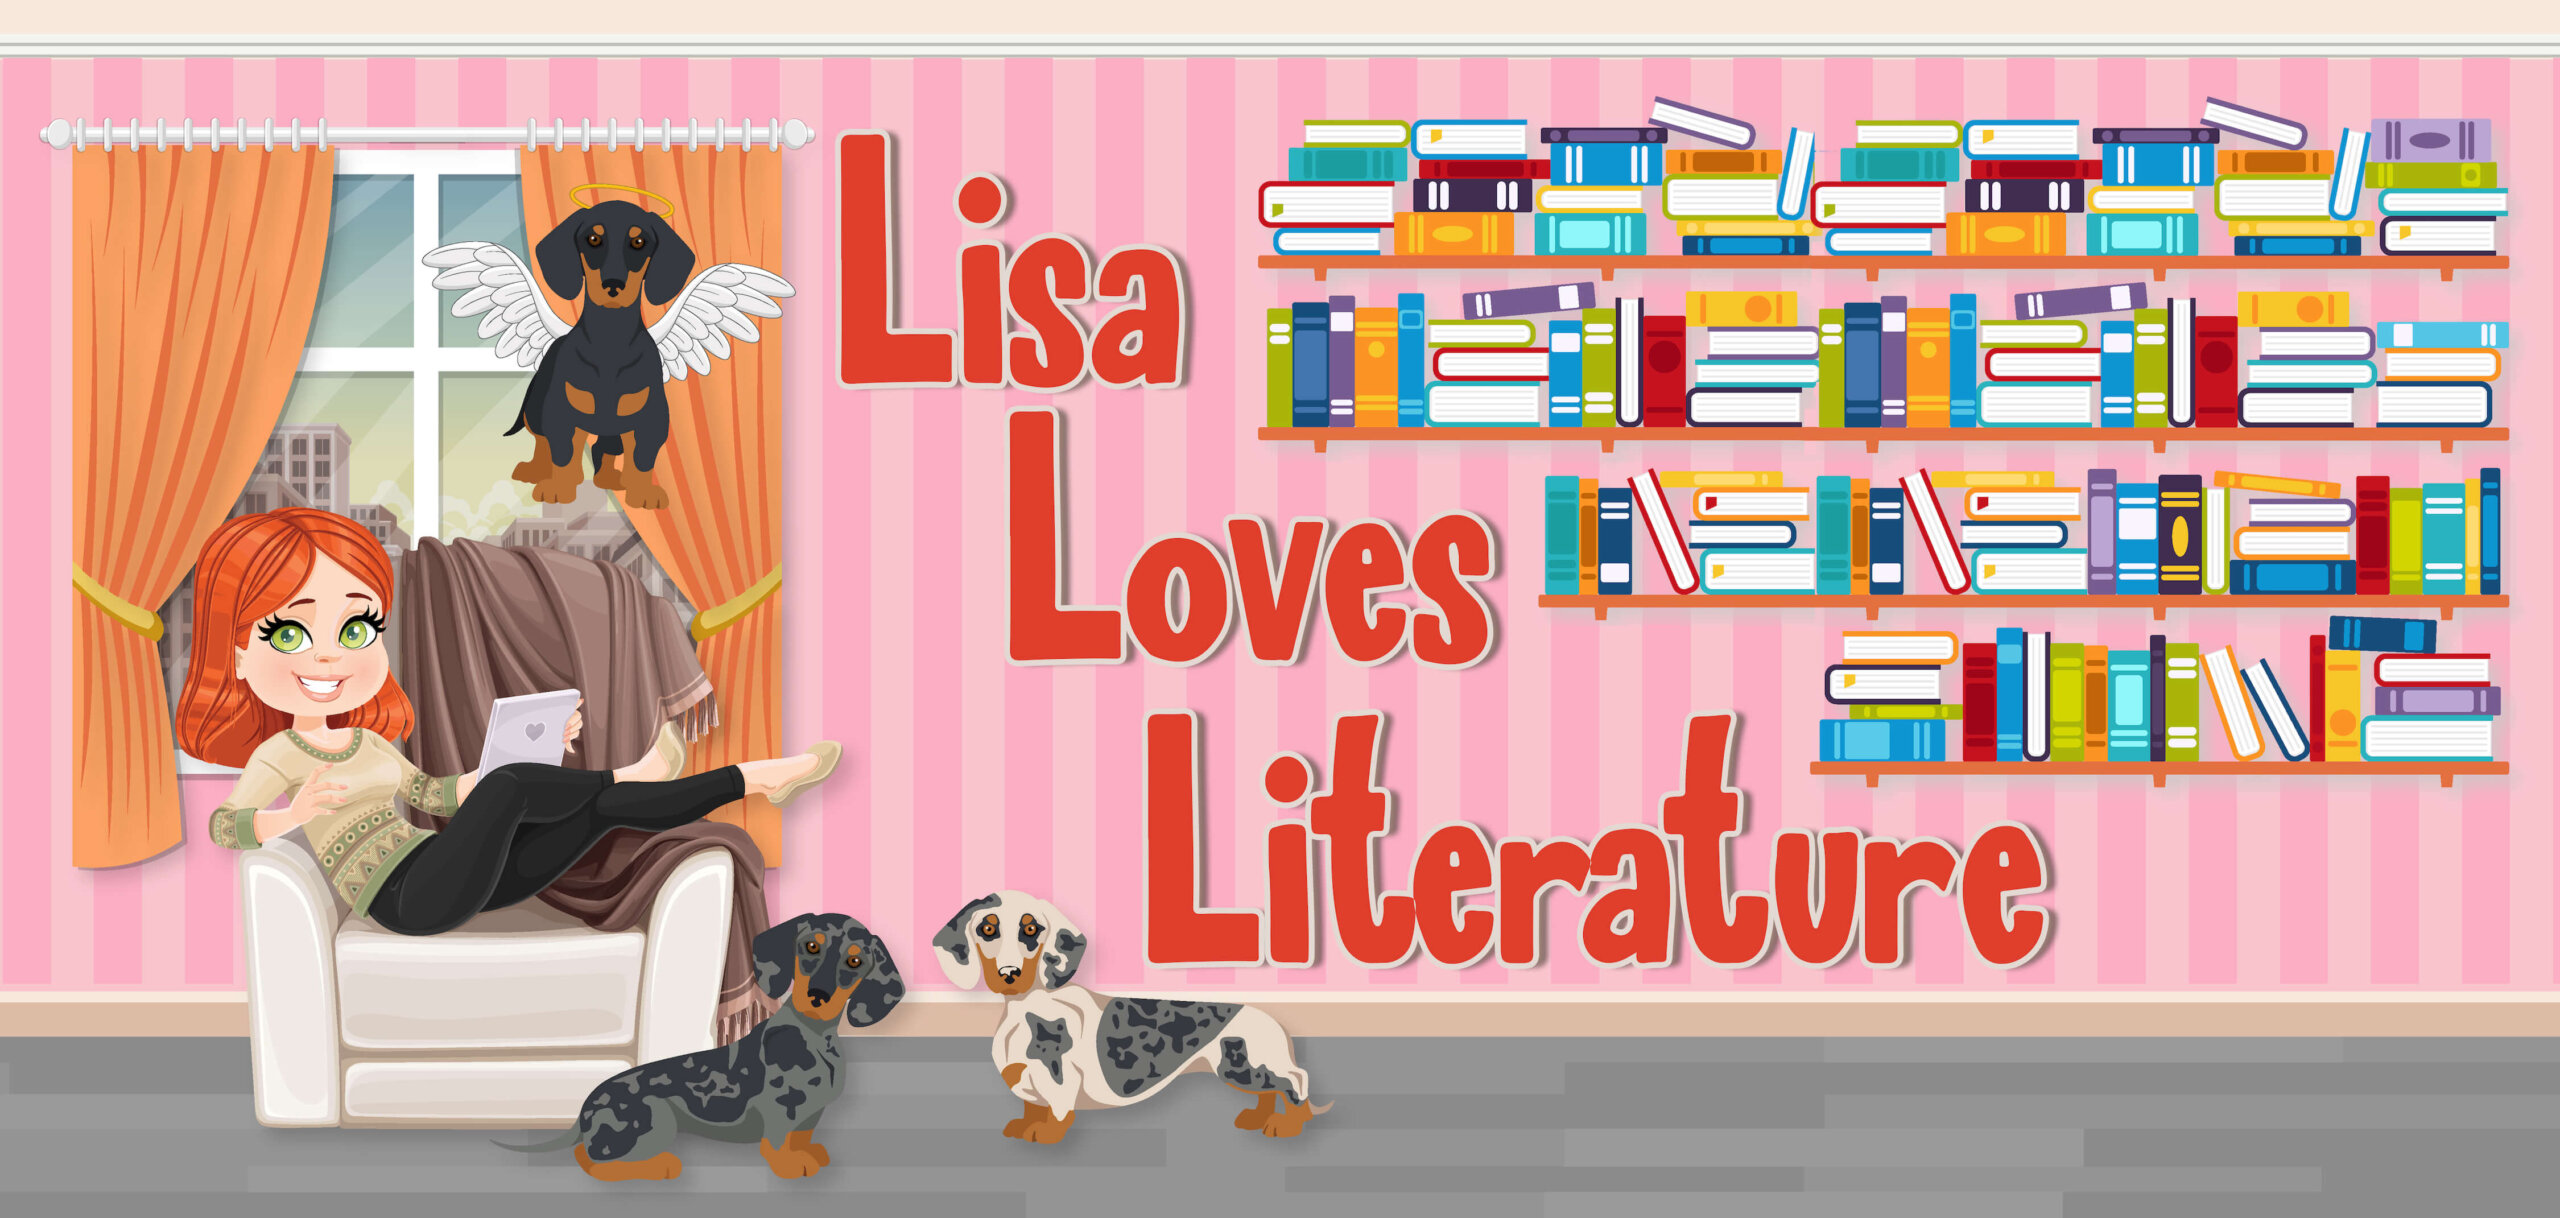 Lisa Loves Literature